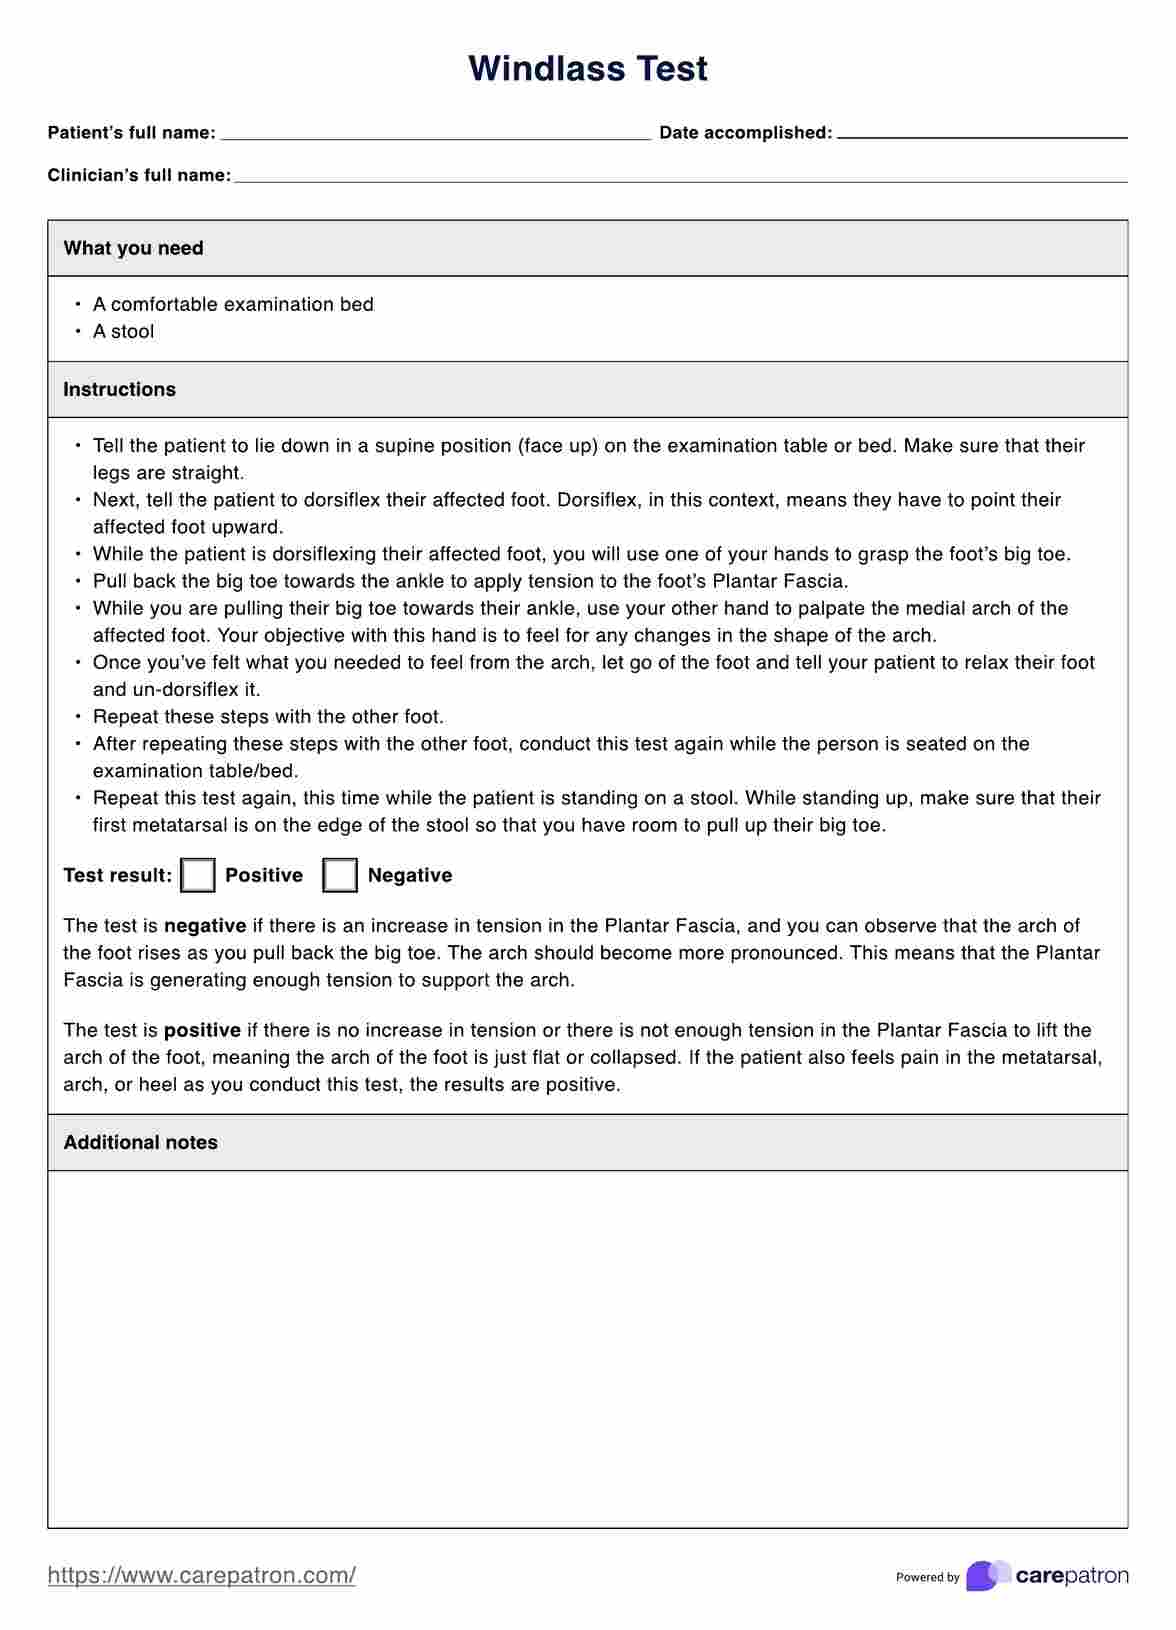 Windlass Test PDF Example